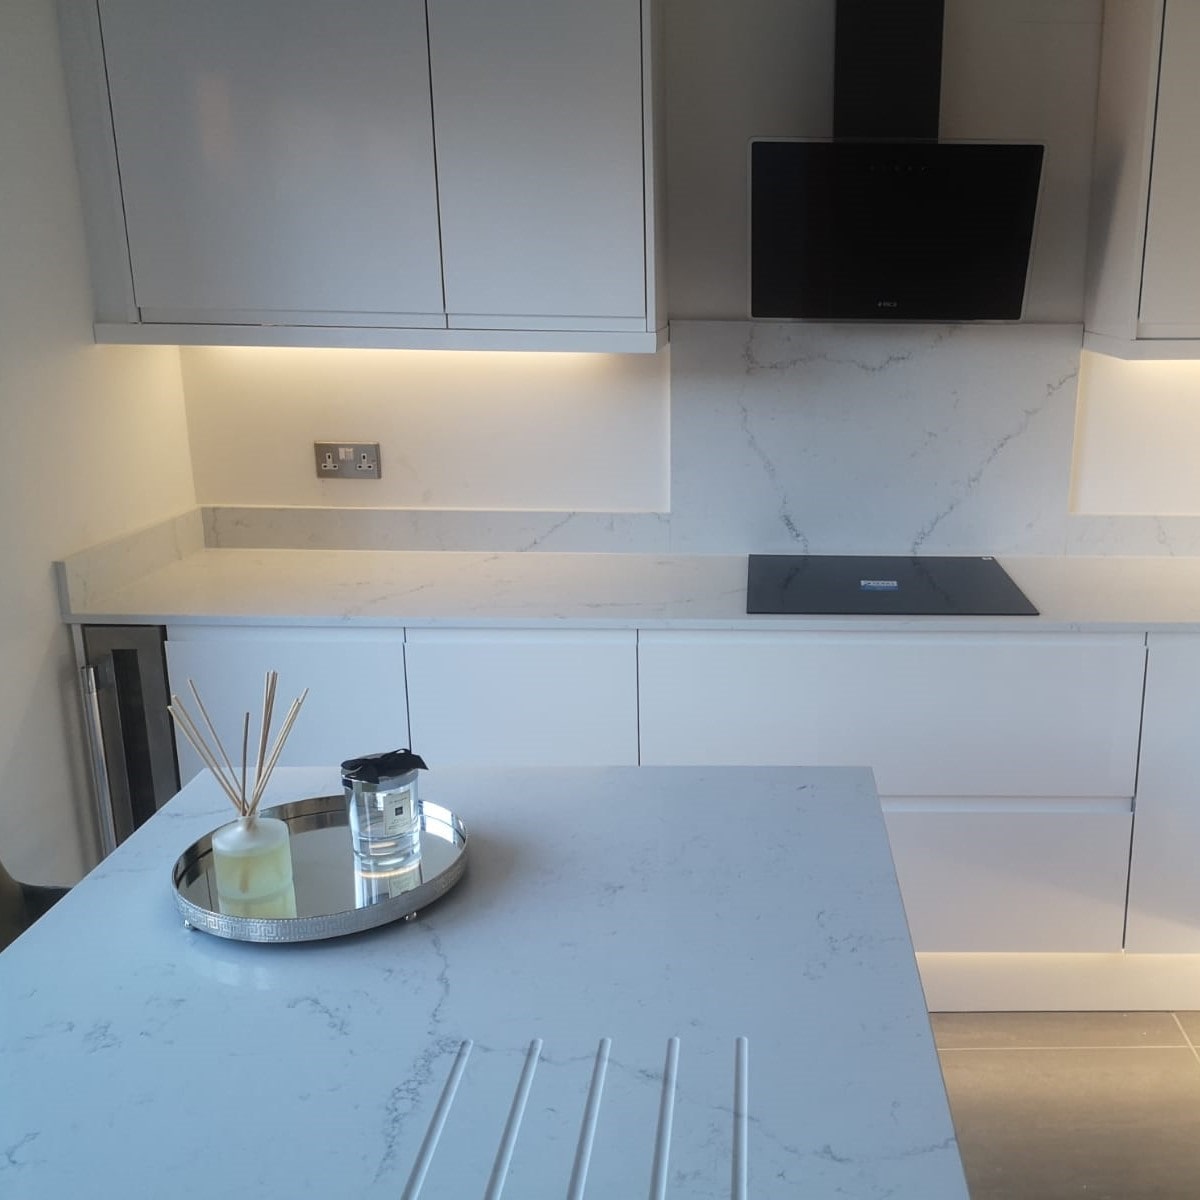 Fugen Avalanche soft white Quartz kitchen worktops and backsplash with faint veining in a grey colour.